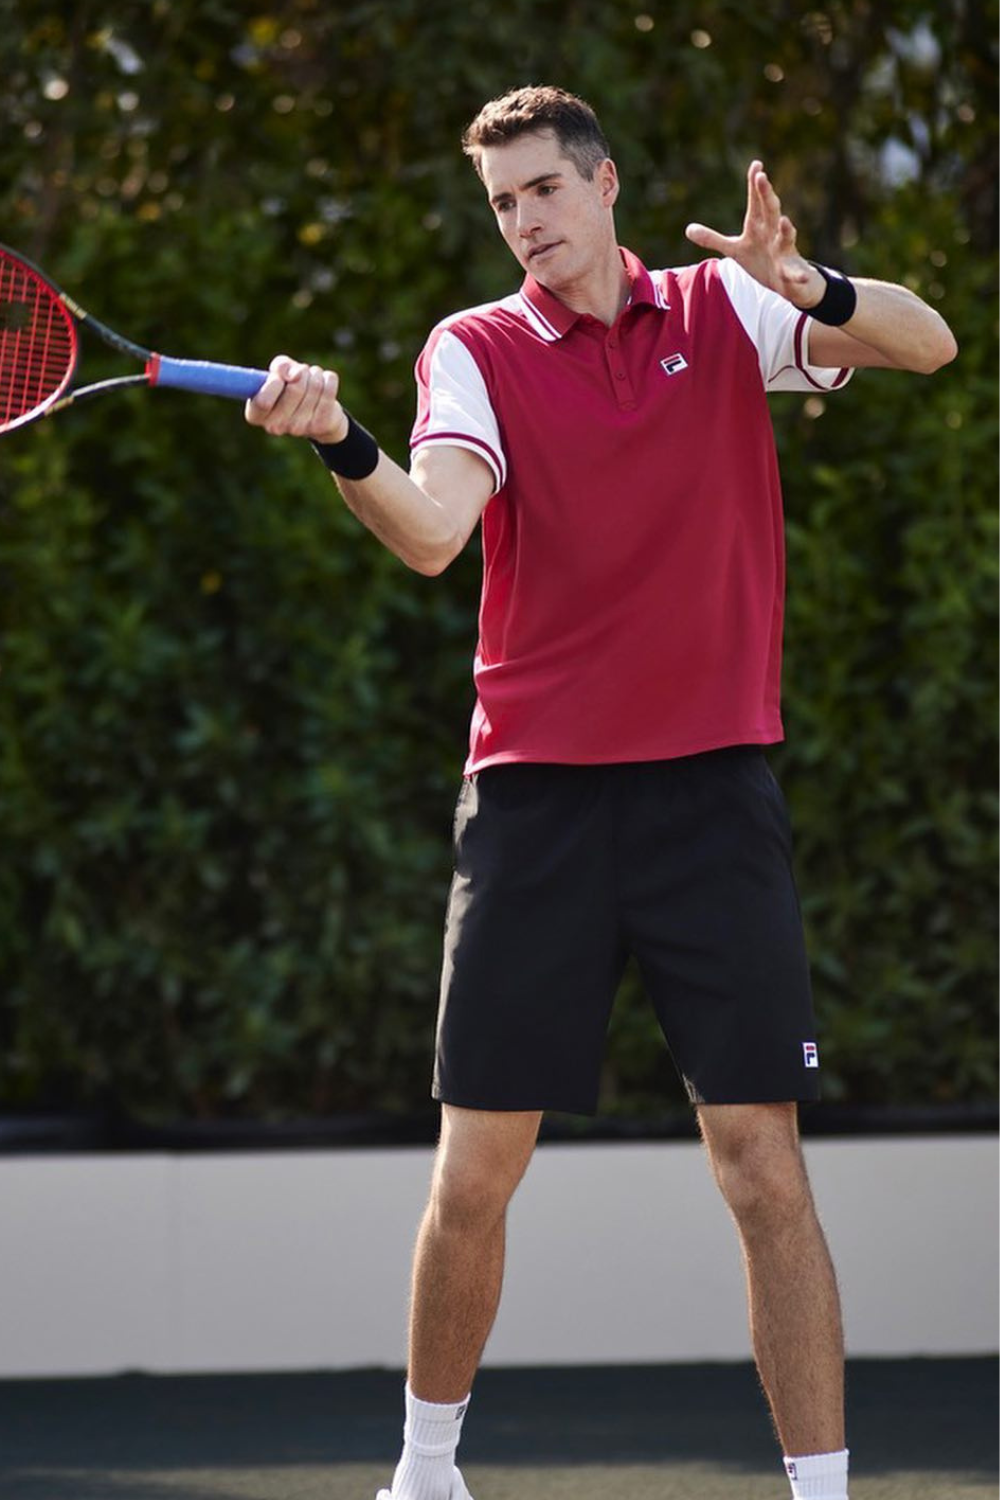 The American Professional Tennis Player, John Isner